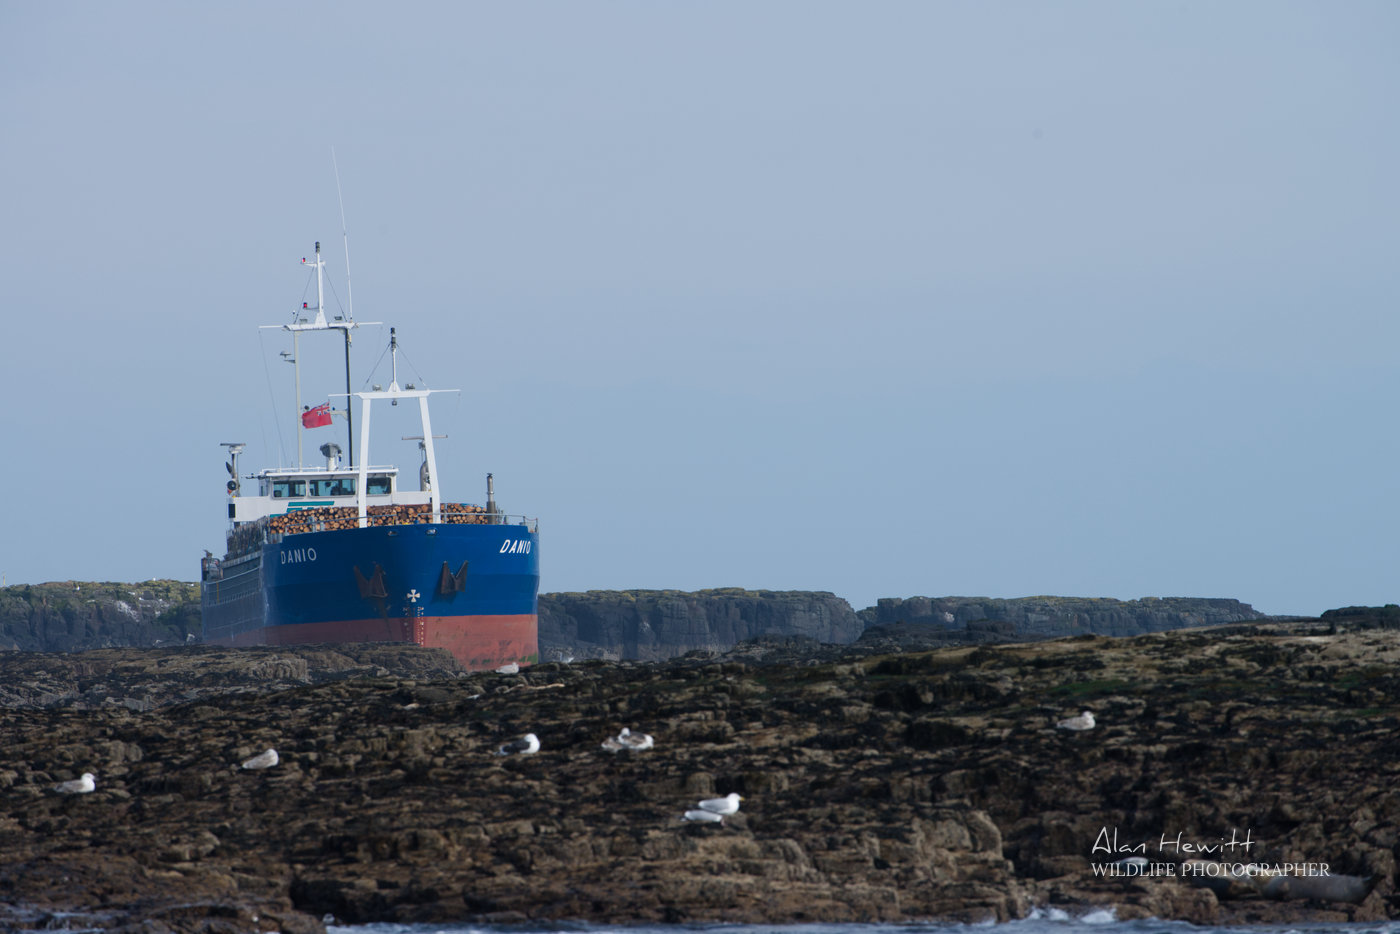 MV Danio Grounded on the Blue Caps, Farne Islands. Alan Hewitt Photography.